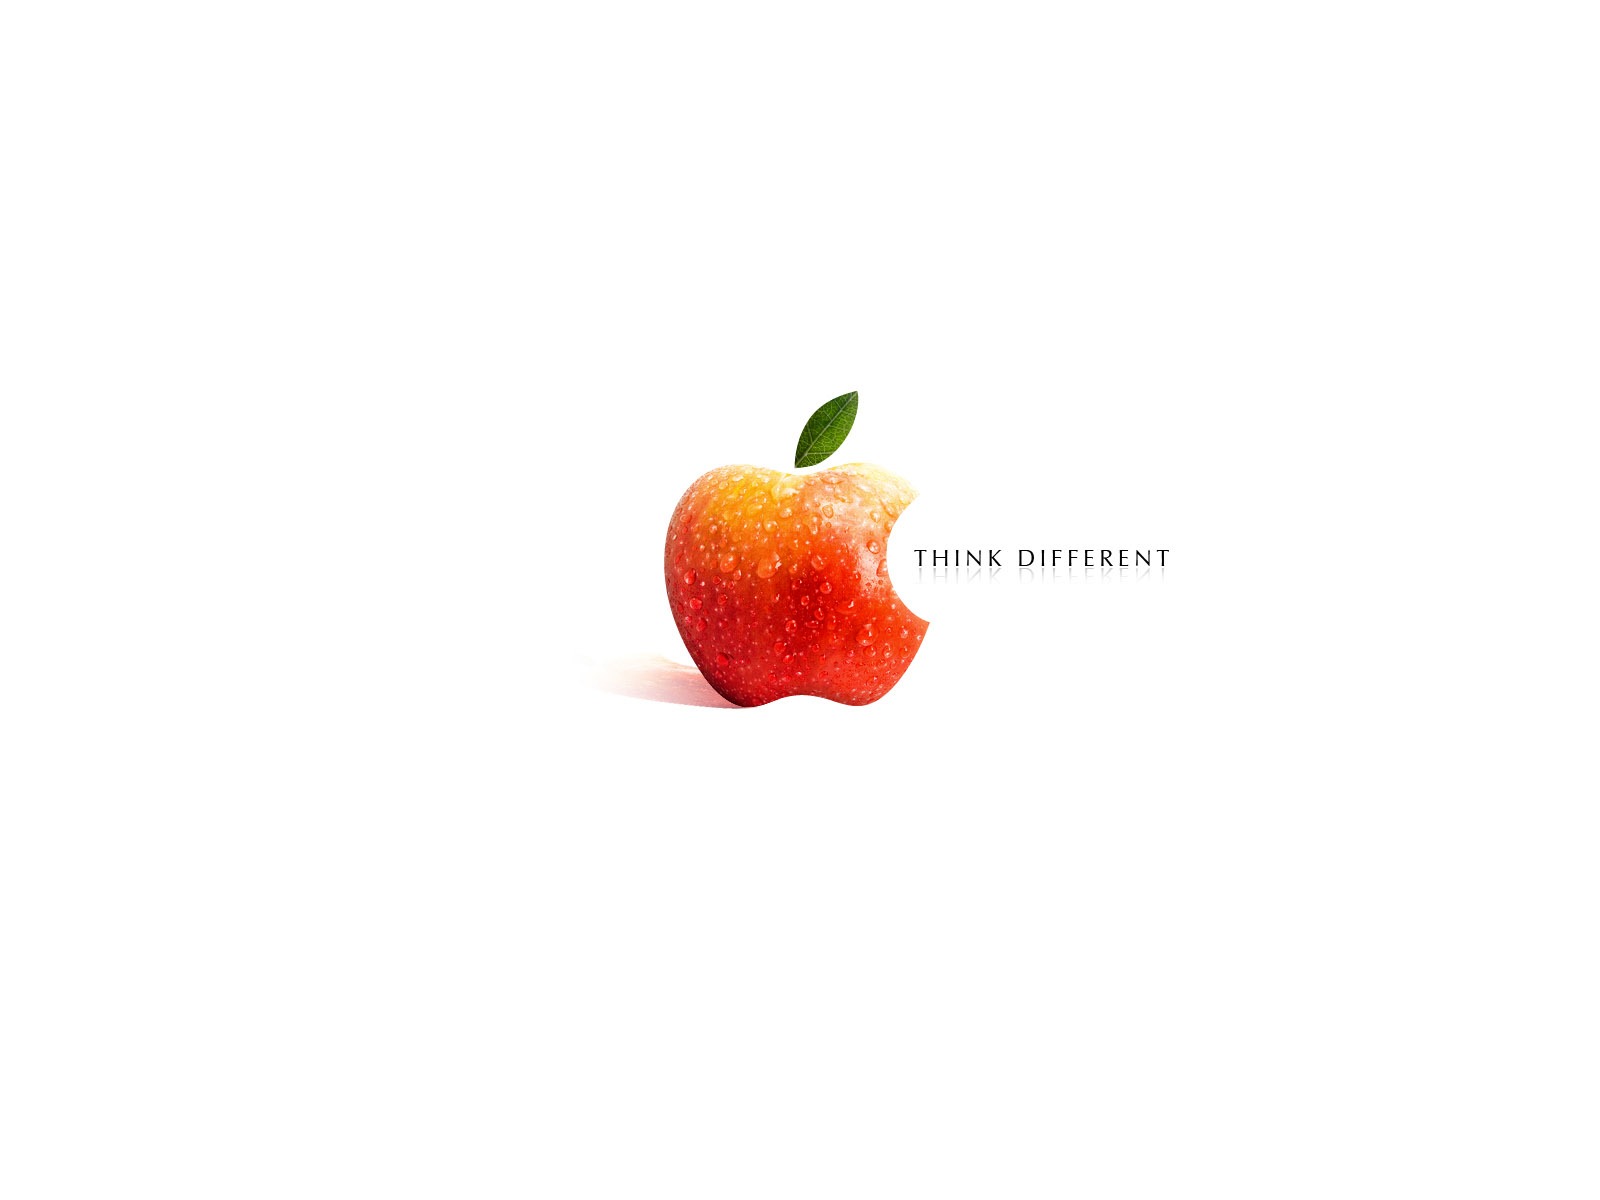 Apple theme wallpaper album (29) #10 - 1600x1200